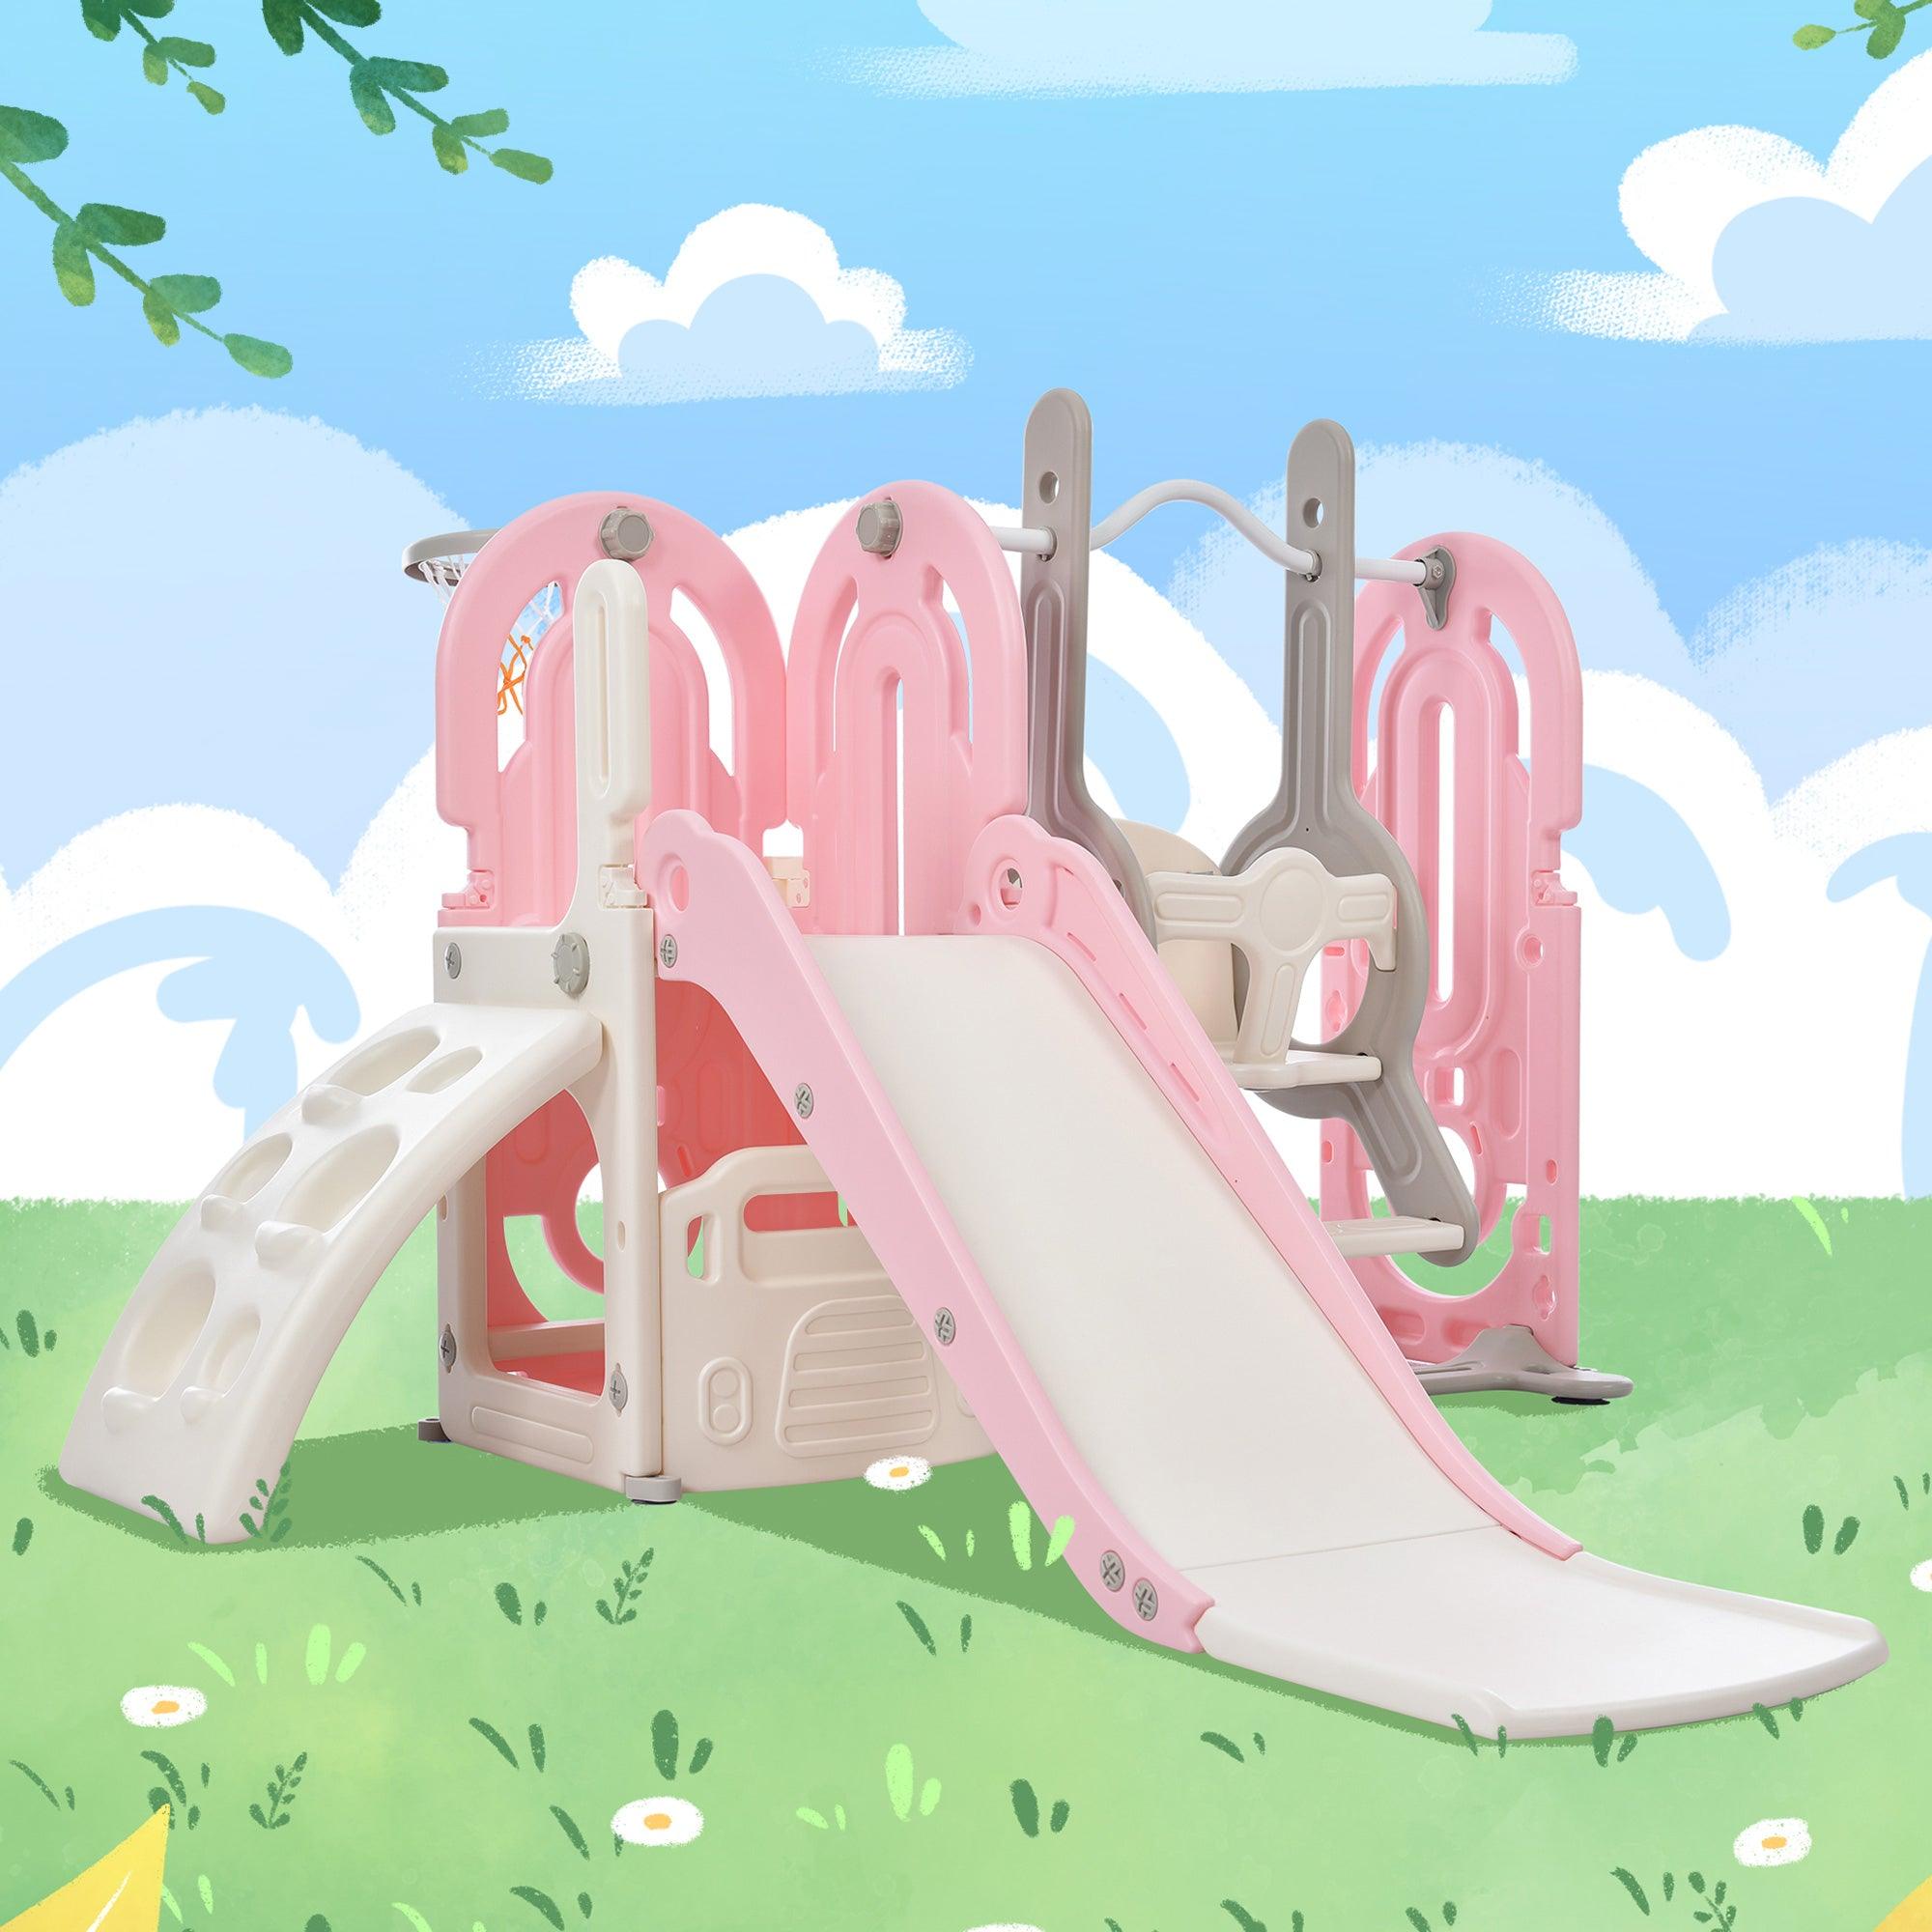 🆓🚛 Toddler Slide & Swing Set 5 in 1, Kids Playground Climber Slide Playset With Basketball Hoop Freestanding Combination for Babies Indoor & Outdoor, Pink & Gray